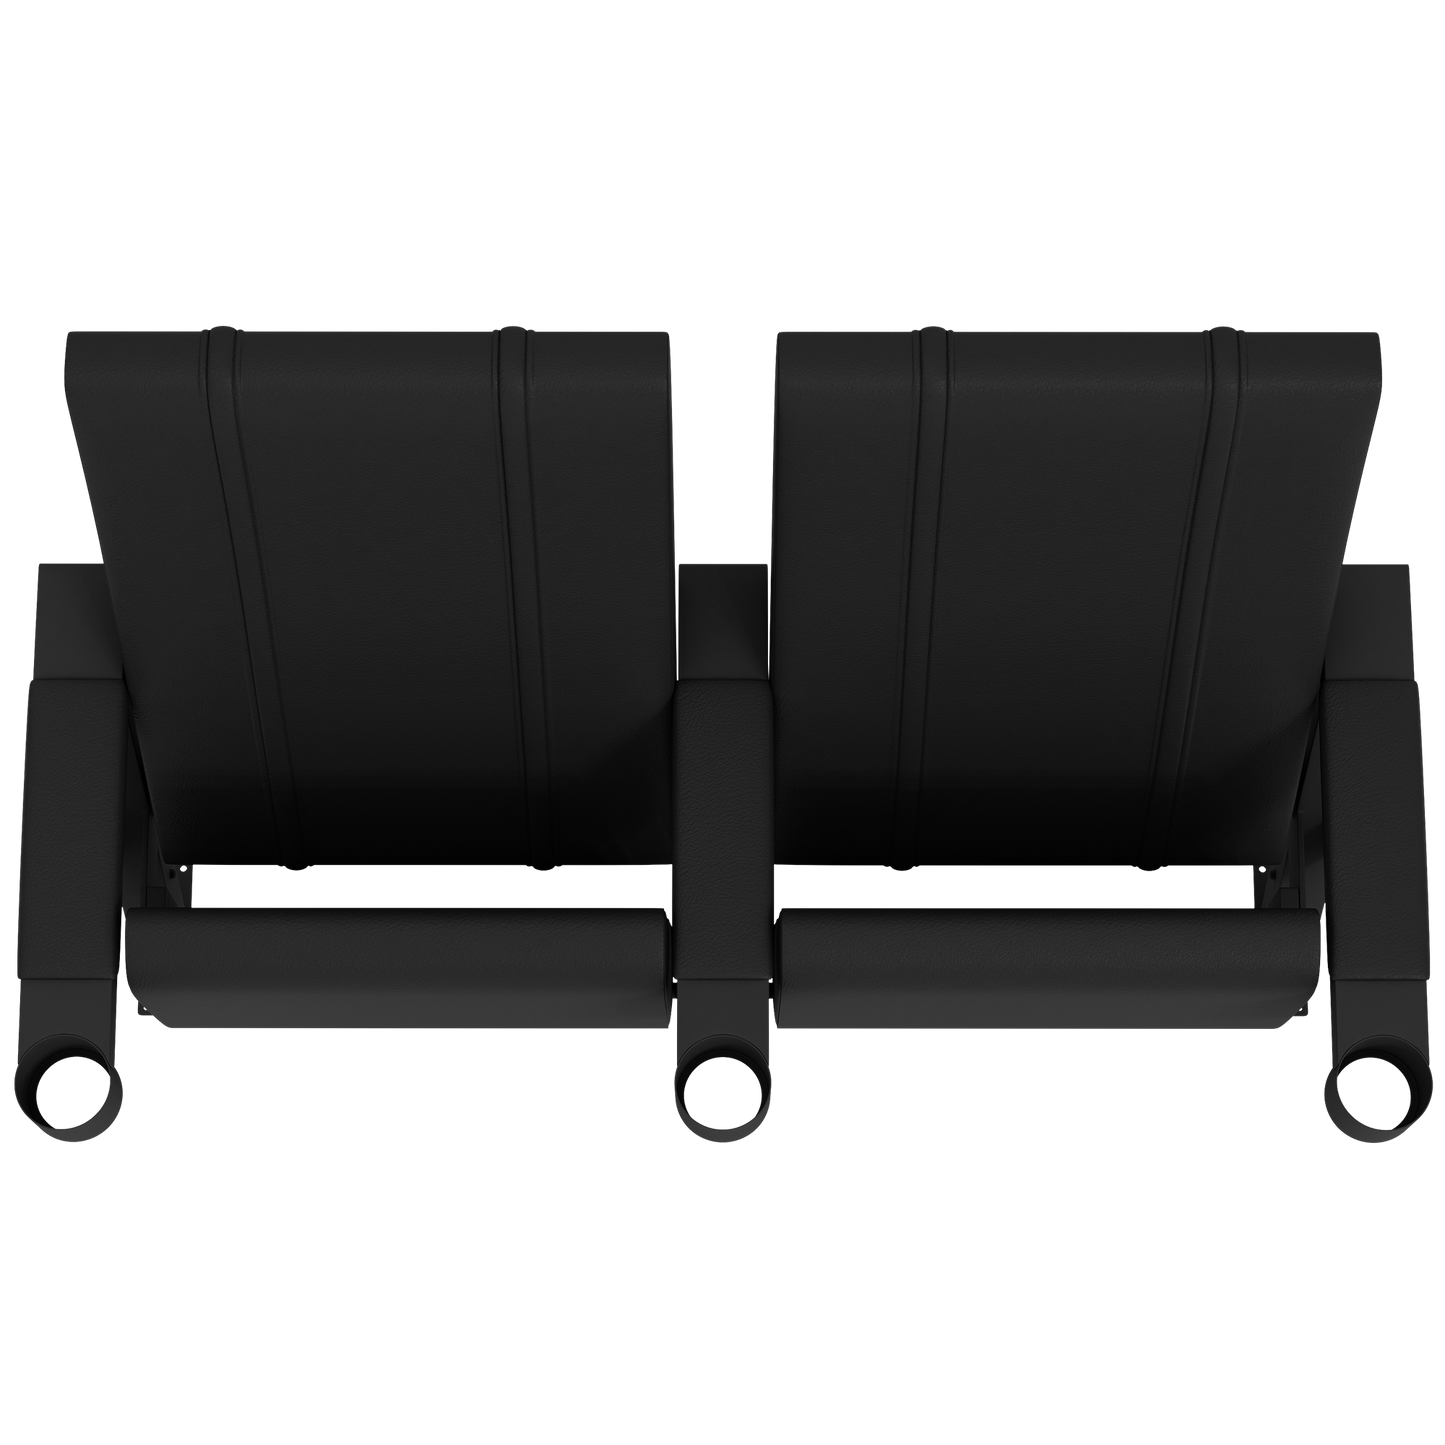 SuiteMax 3.5 VIP Seats with New Orleans Pelicans NOLA Logo